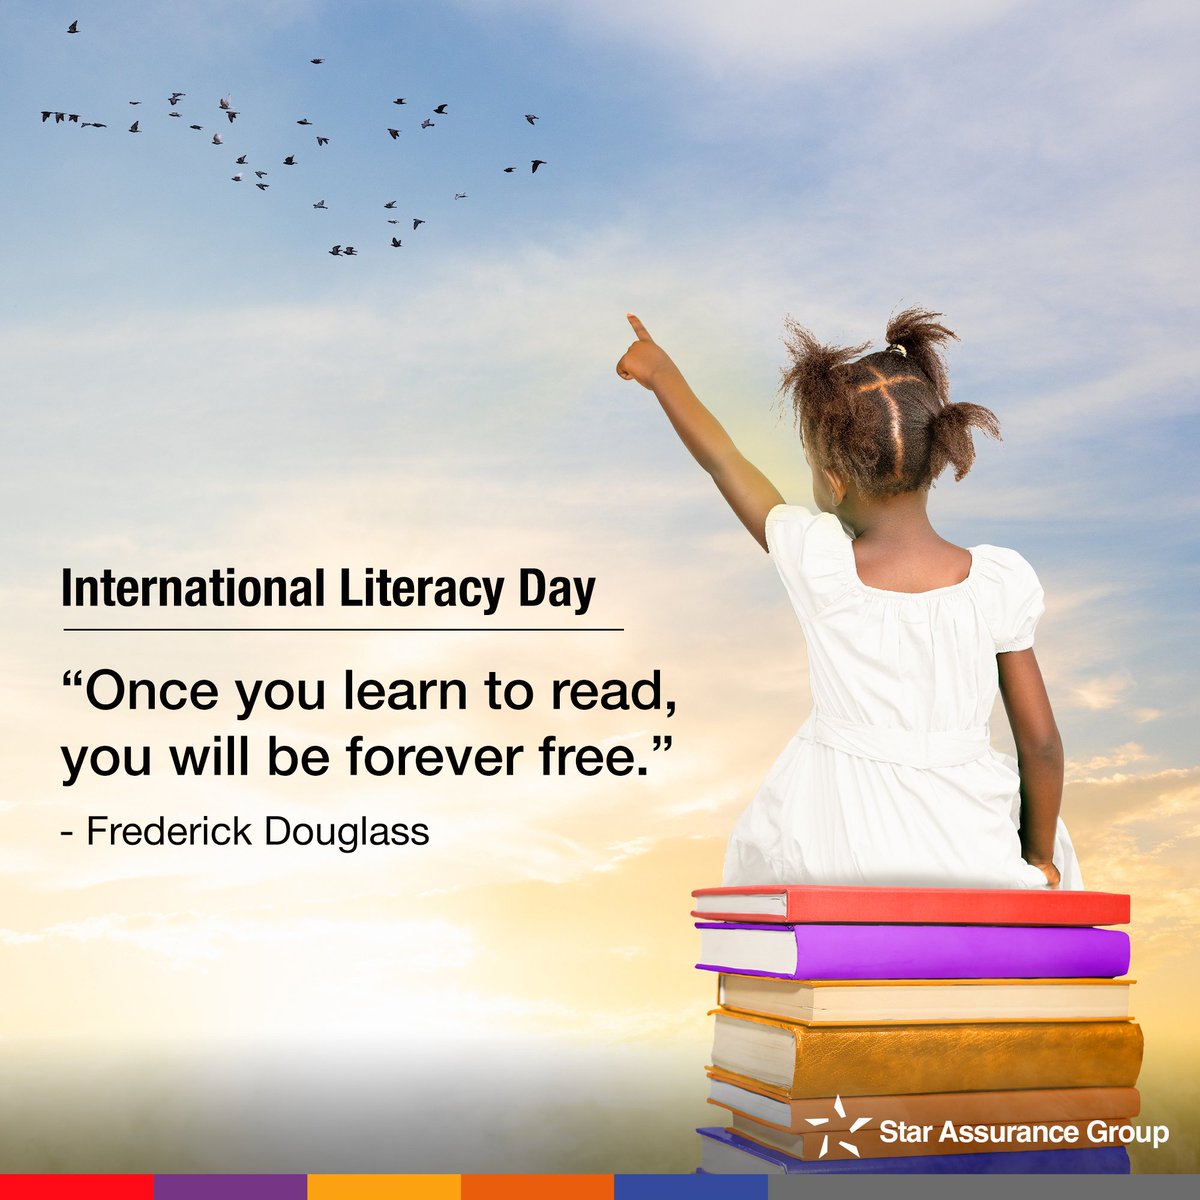 Celebrating International Literacy Day!
#literacyday2023 
#educationmatters 
#stargroup